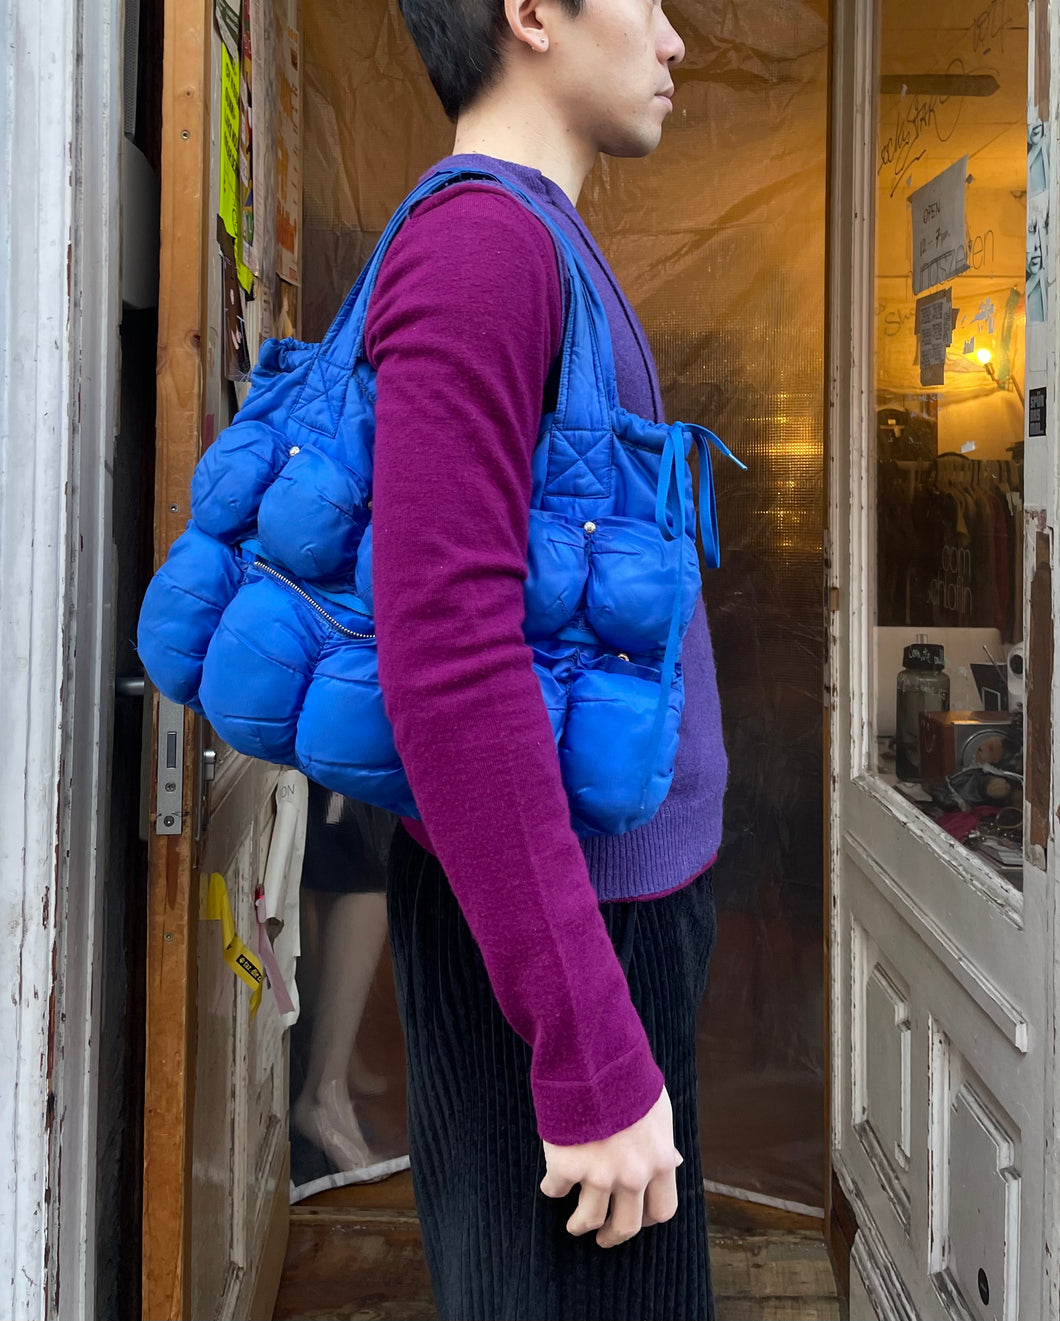 Marithe Francois Girbaud puffy bag pokachu in blue